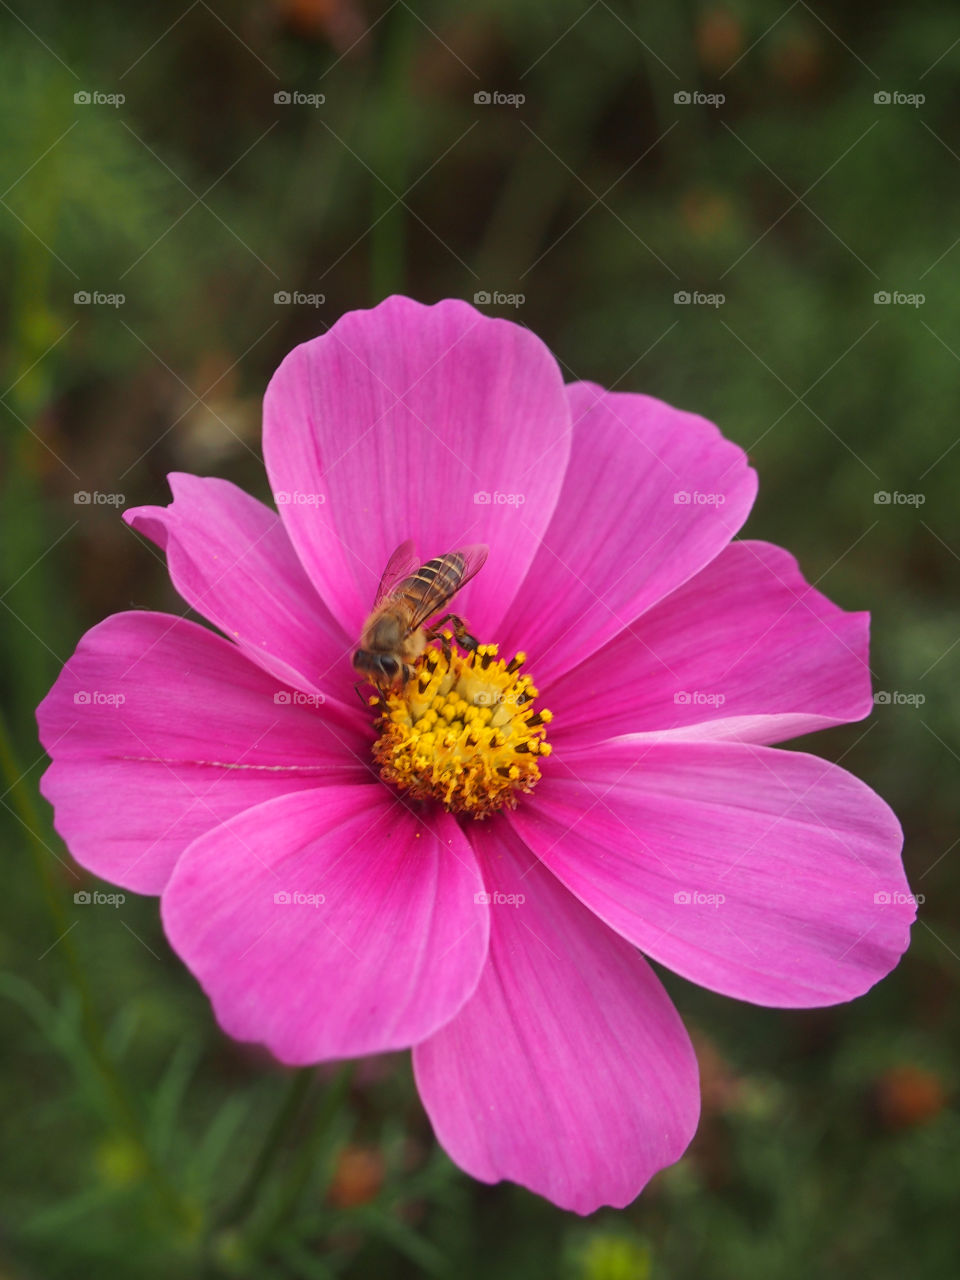 Bee & Flower